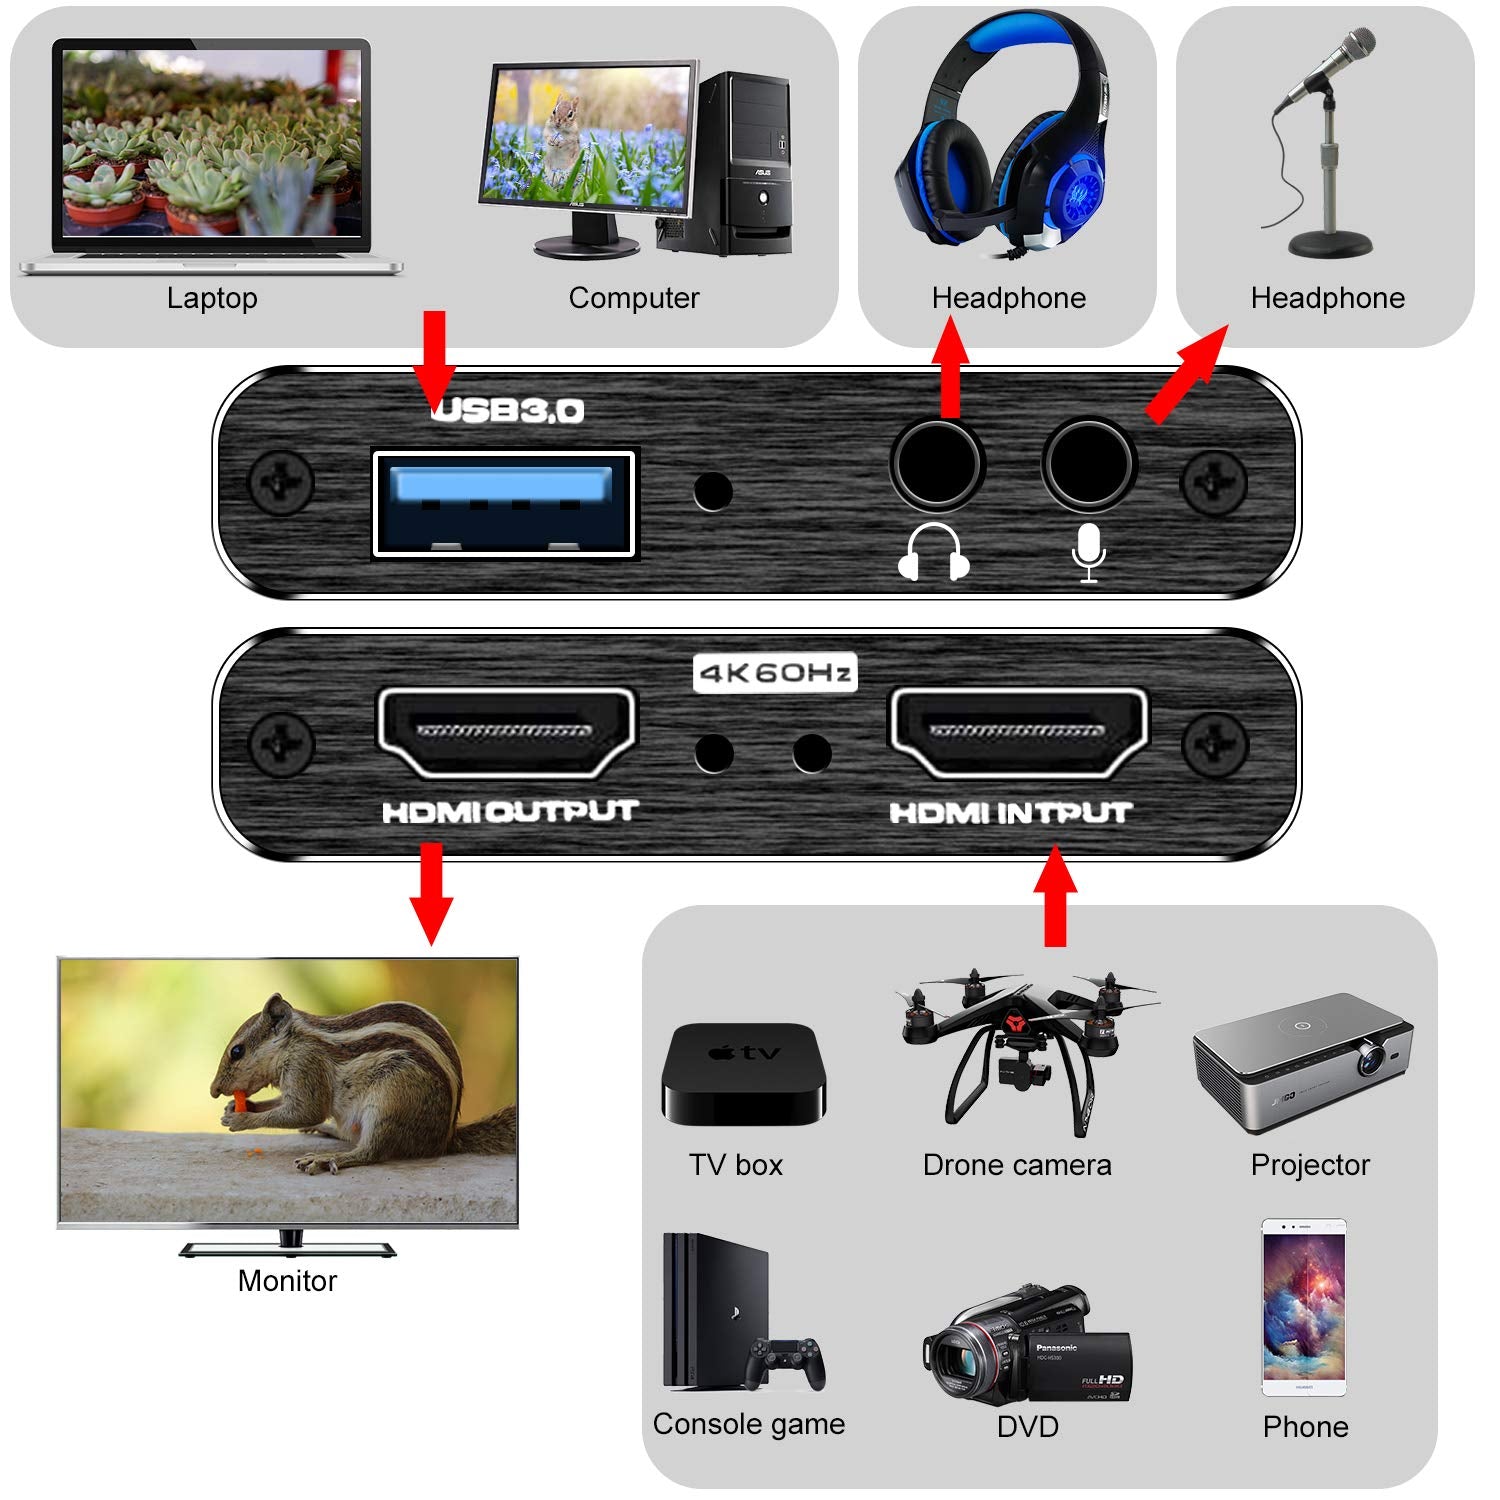 4K Audio Video Capture Card HDMI USB 3.0 Video Capture Device 1080P 60